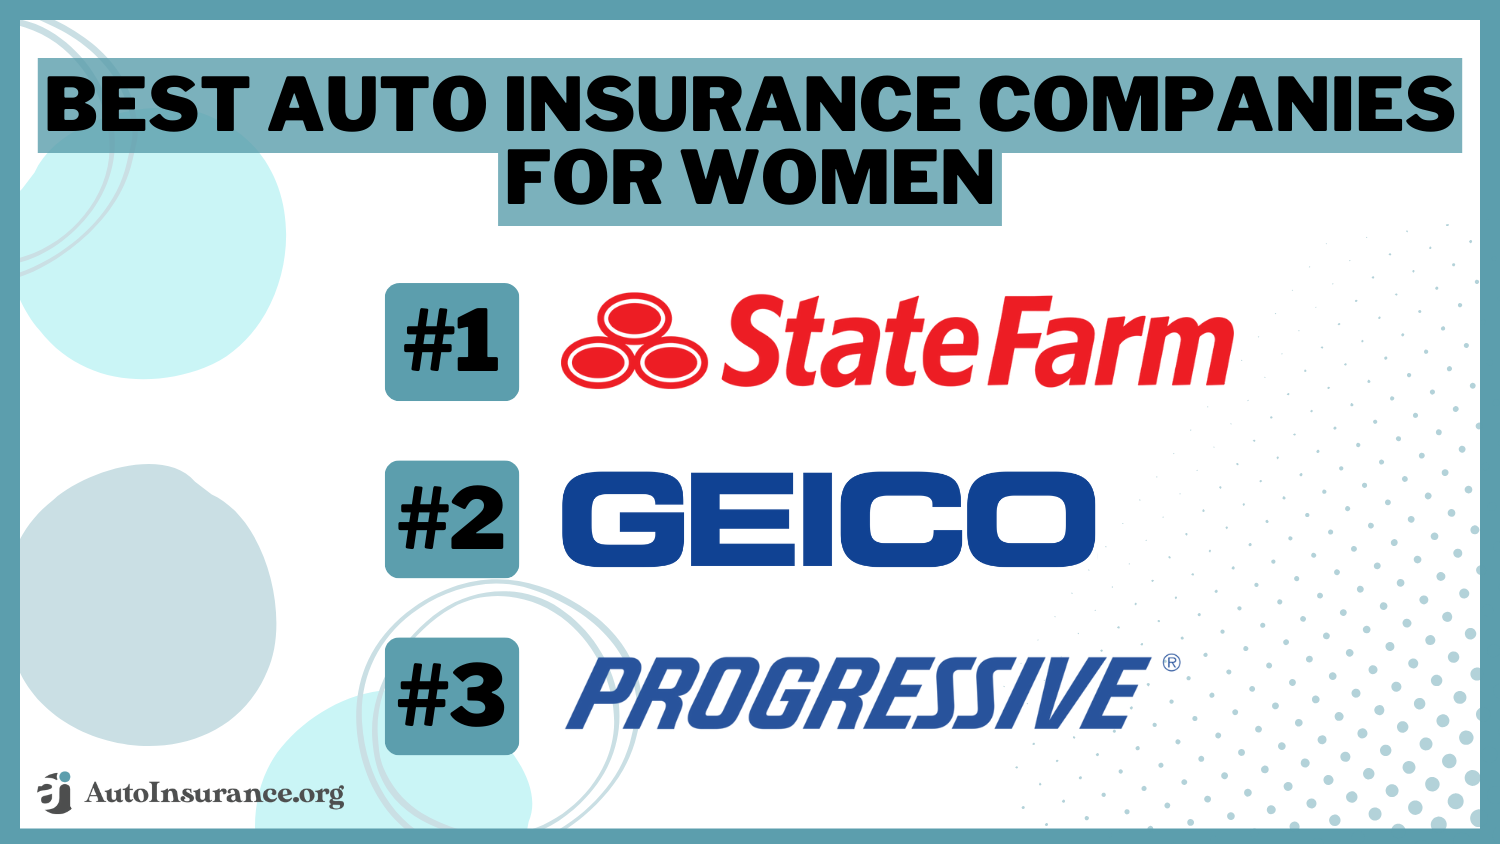 Best Auto Insurance Companies for Women: State Farm, Geico, Progressive